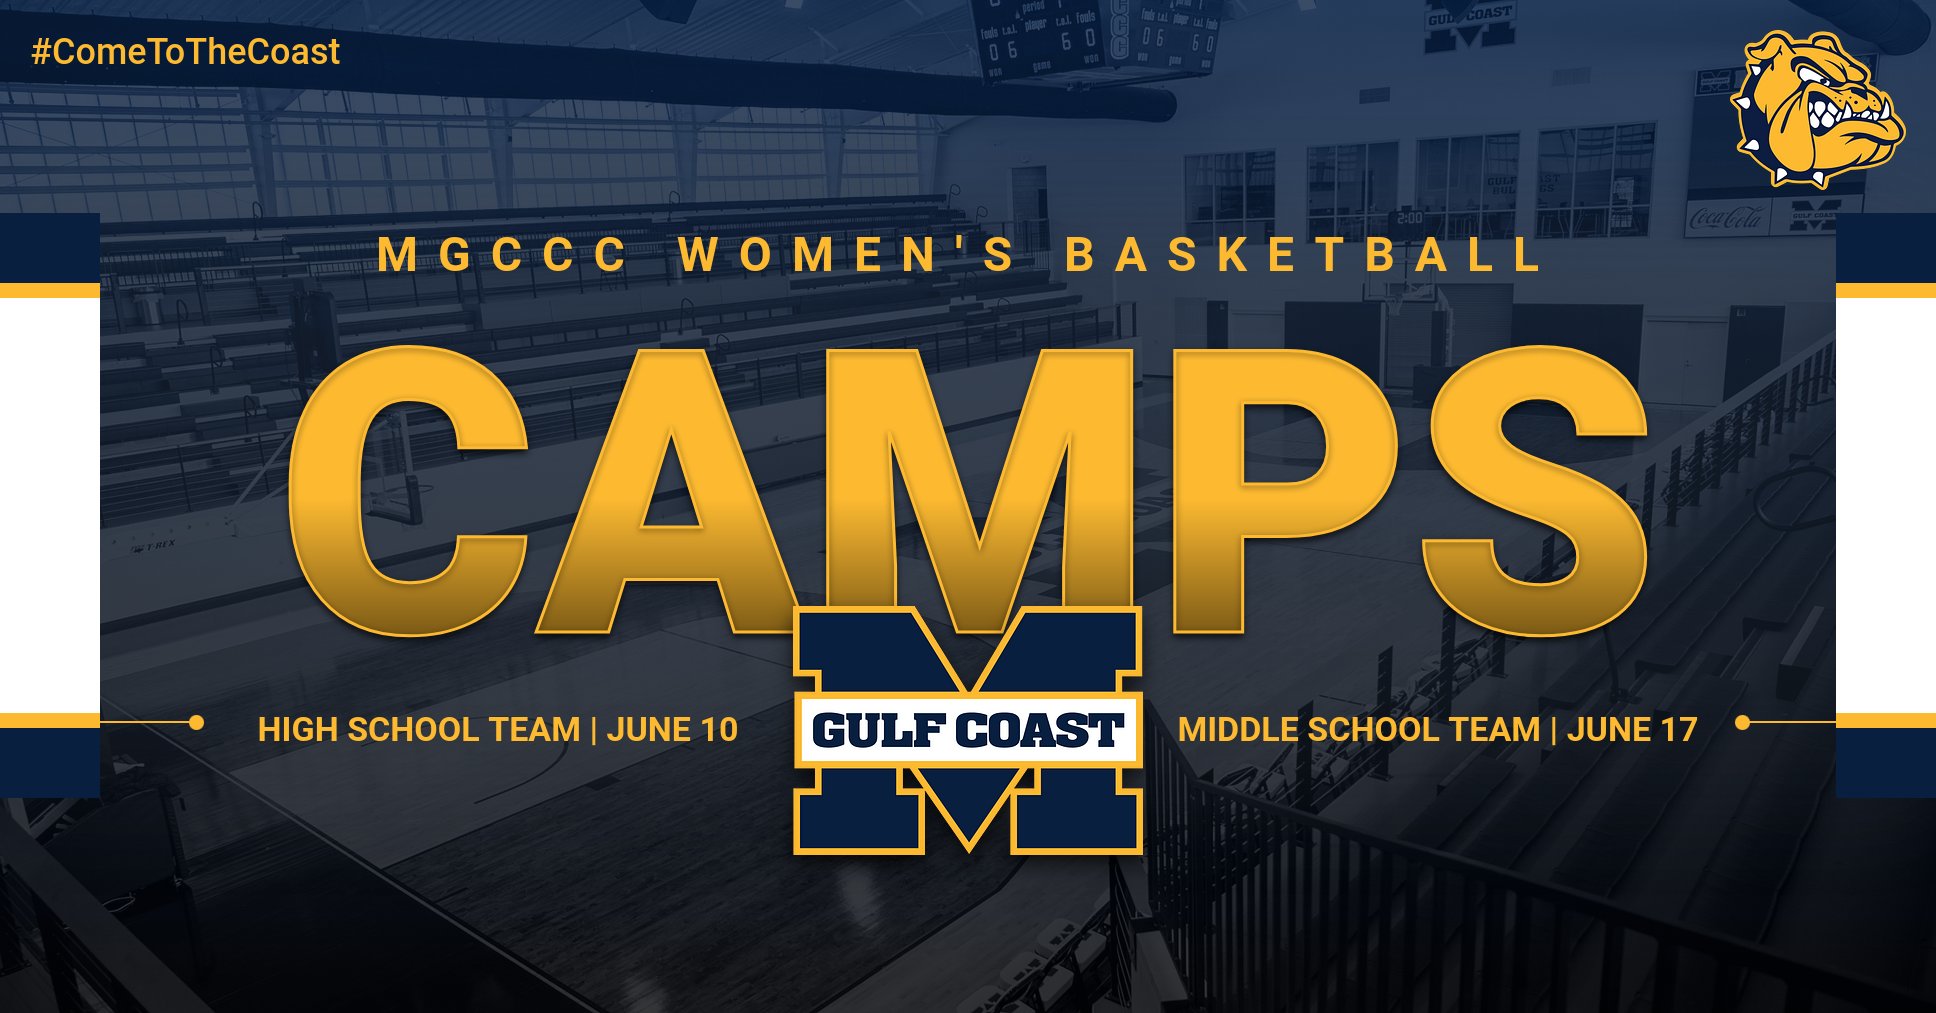 Women’s Basketball will host 2 team camps